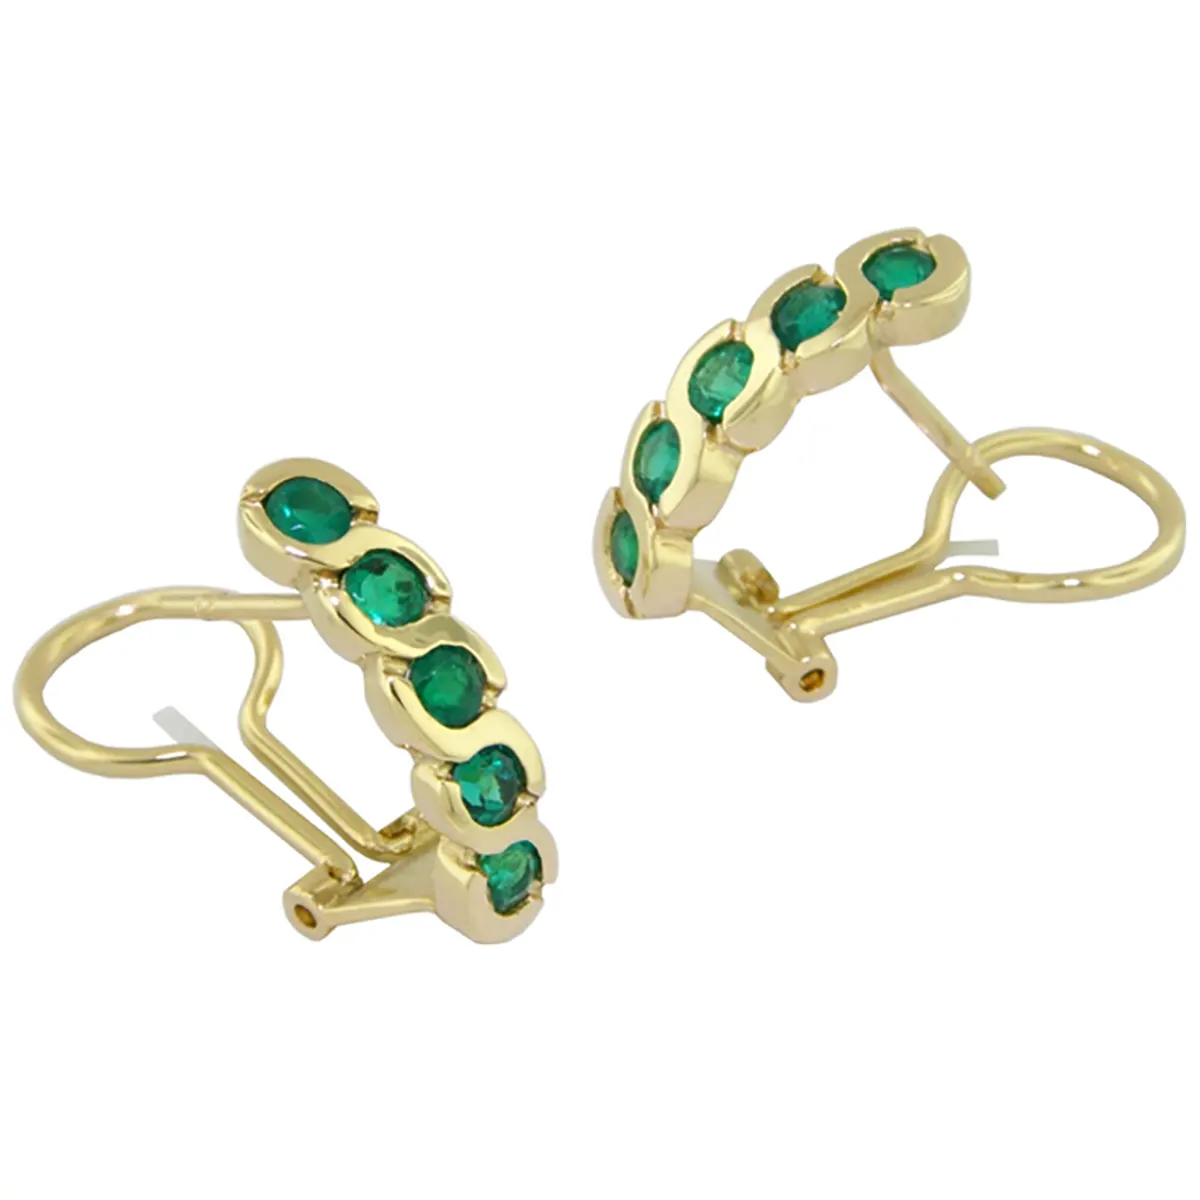 drop-emerald-earrings-in-18k-yellow-gold-bezel-setting-with-clip-backs